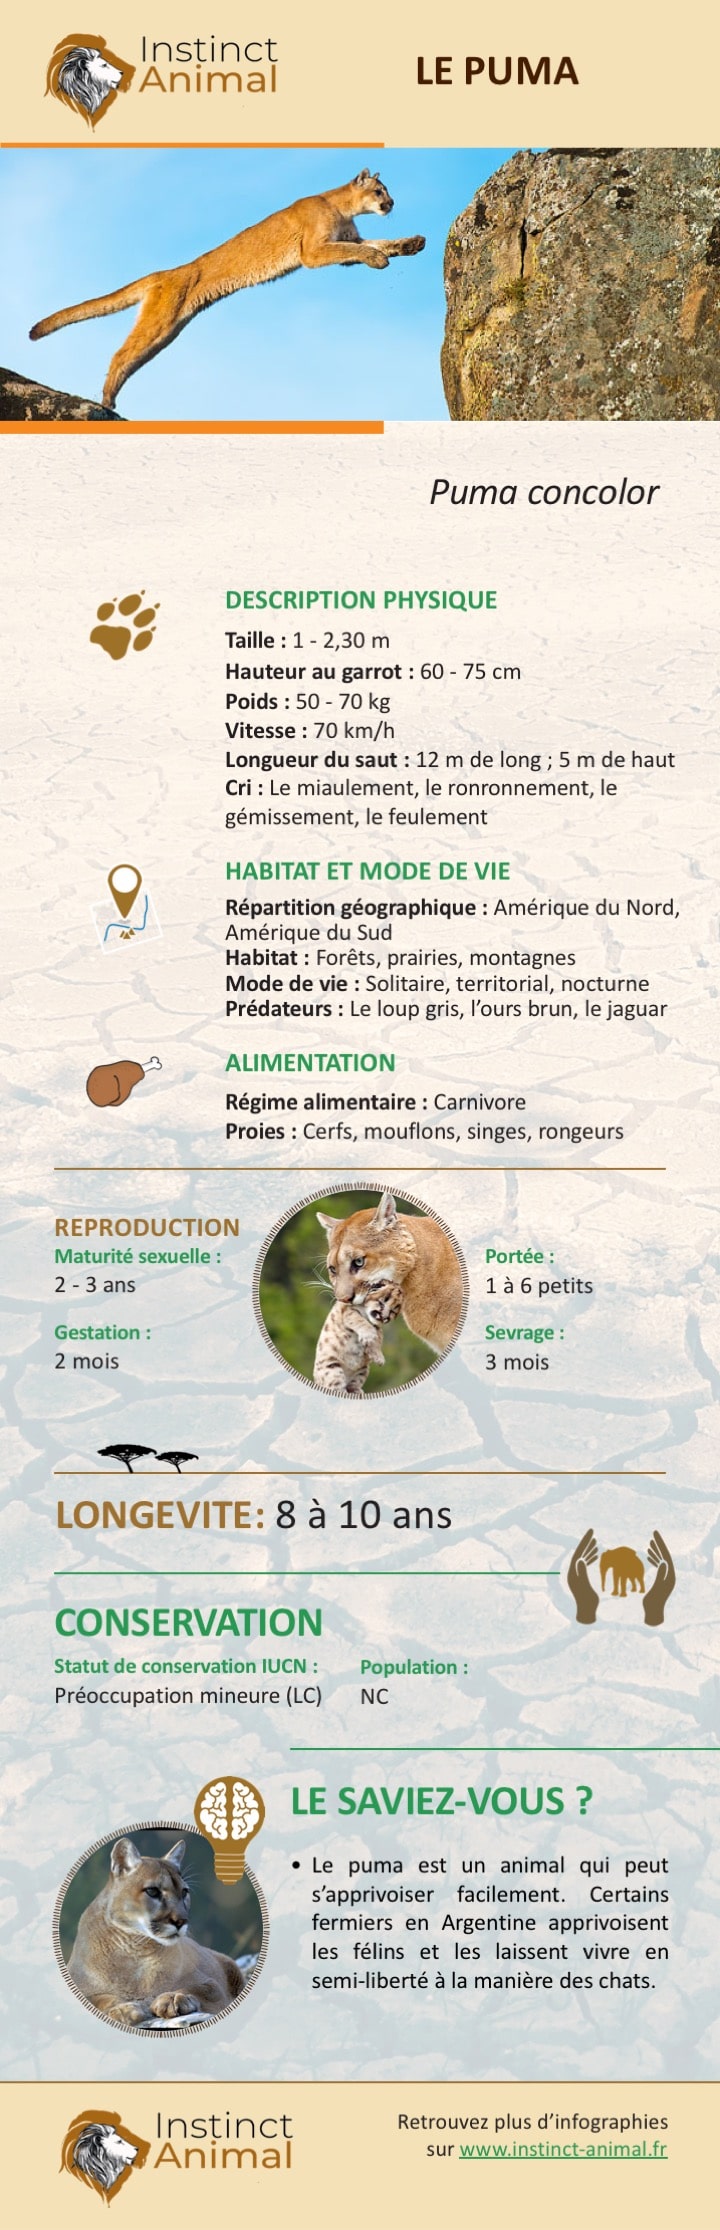 Description du puma - Infographie - Instinct Animal